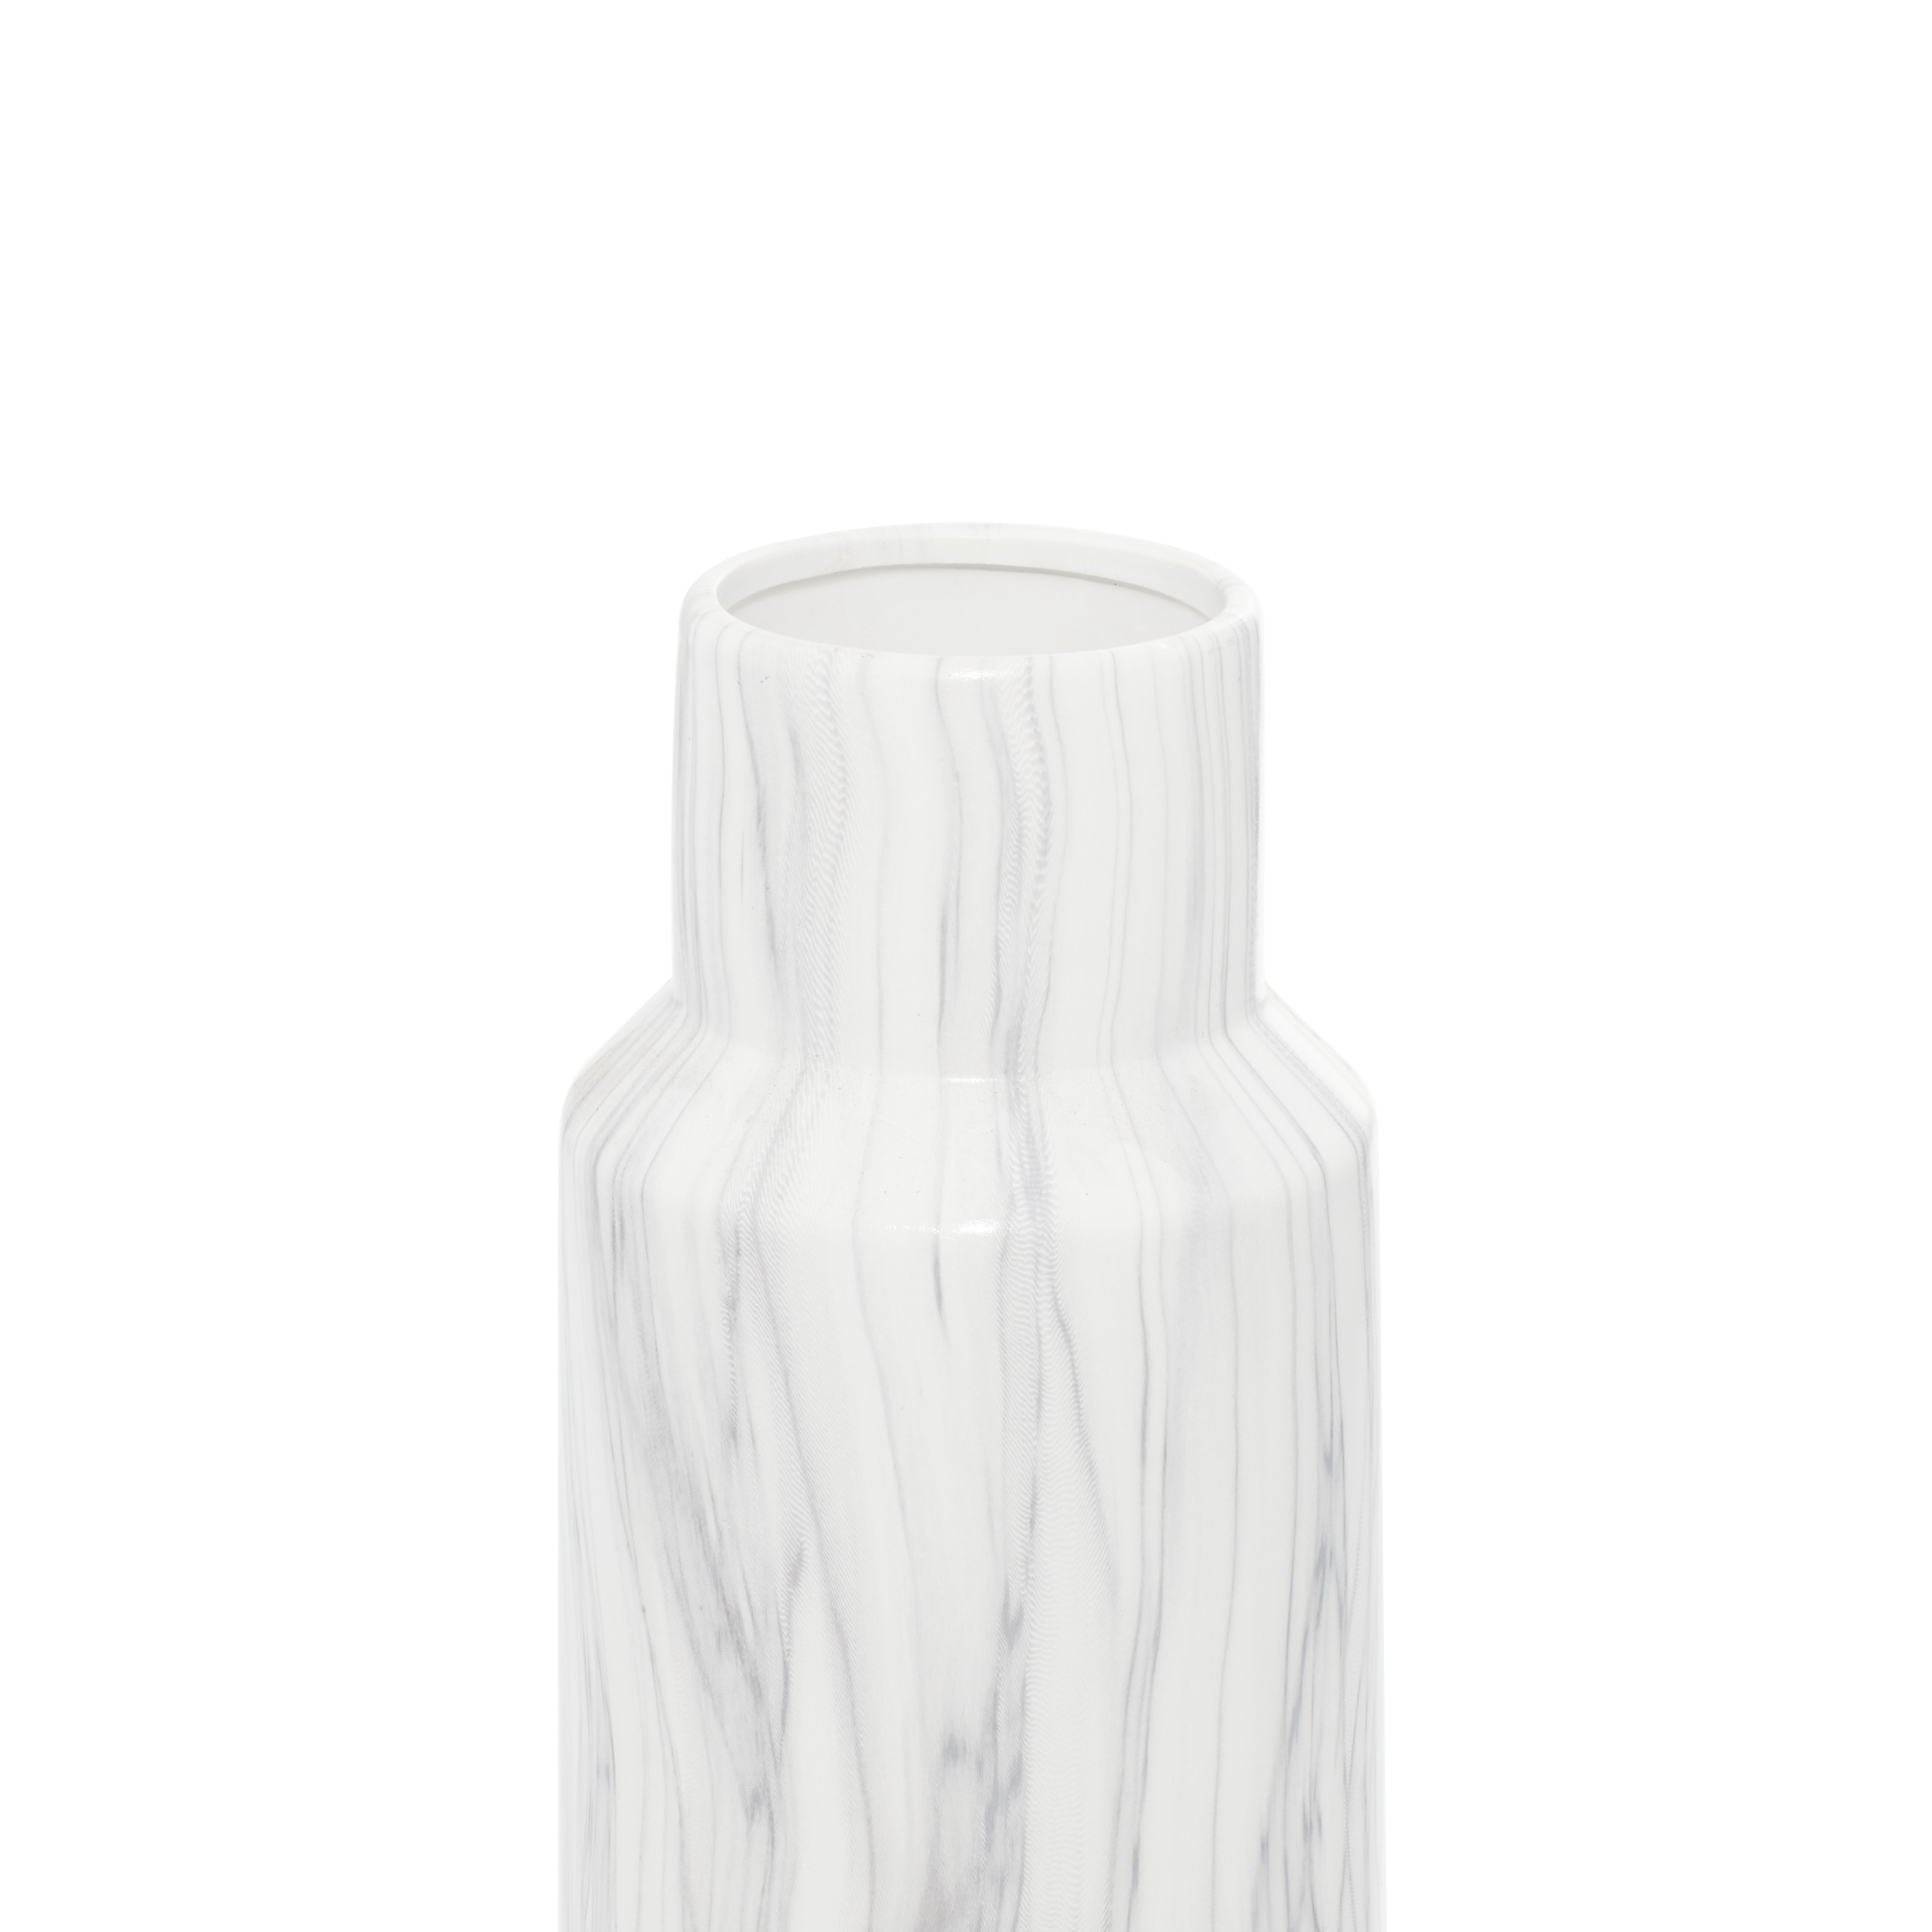 DecMode 15" Faux Marble White Ceramic Vase - image 4 of 6